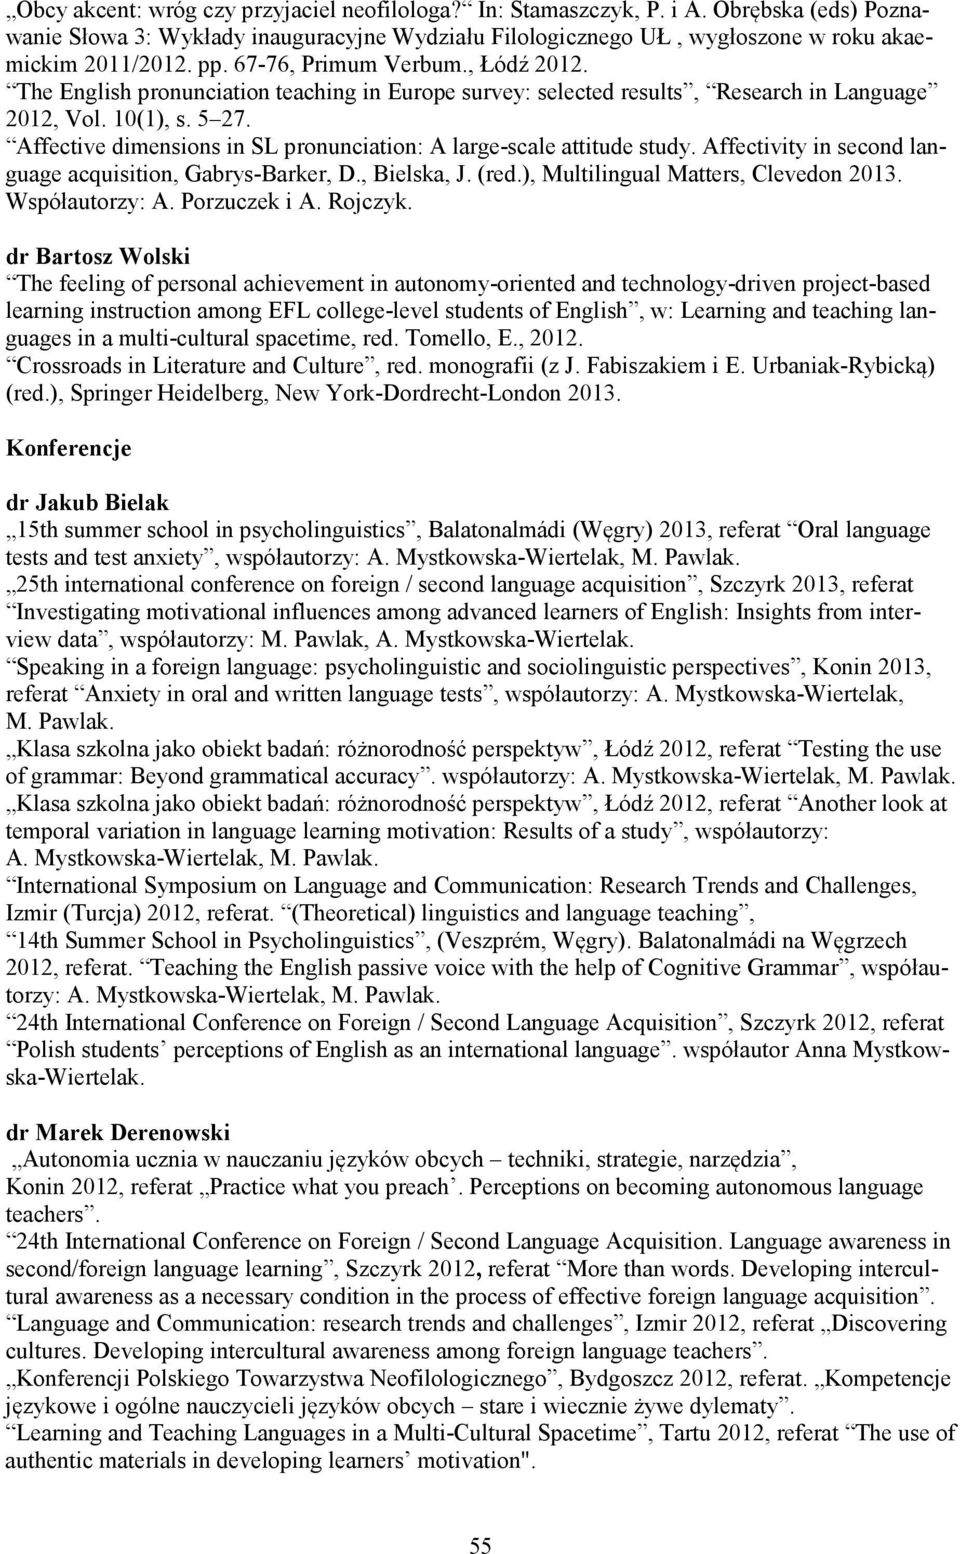 Affective dimensions in SL pronunciation: A large-scale attitude study. Affectivity in second language acquisition, Gabrys-Barker, D., Bielska, J. (red.), Multilingual Matters, Clevedon 2013.